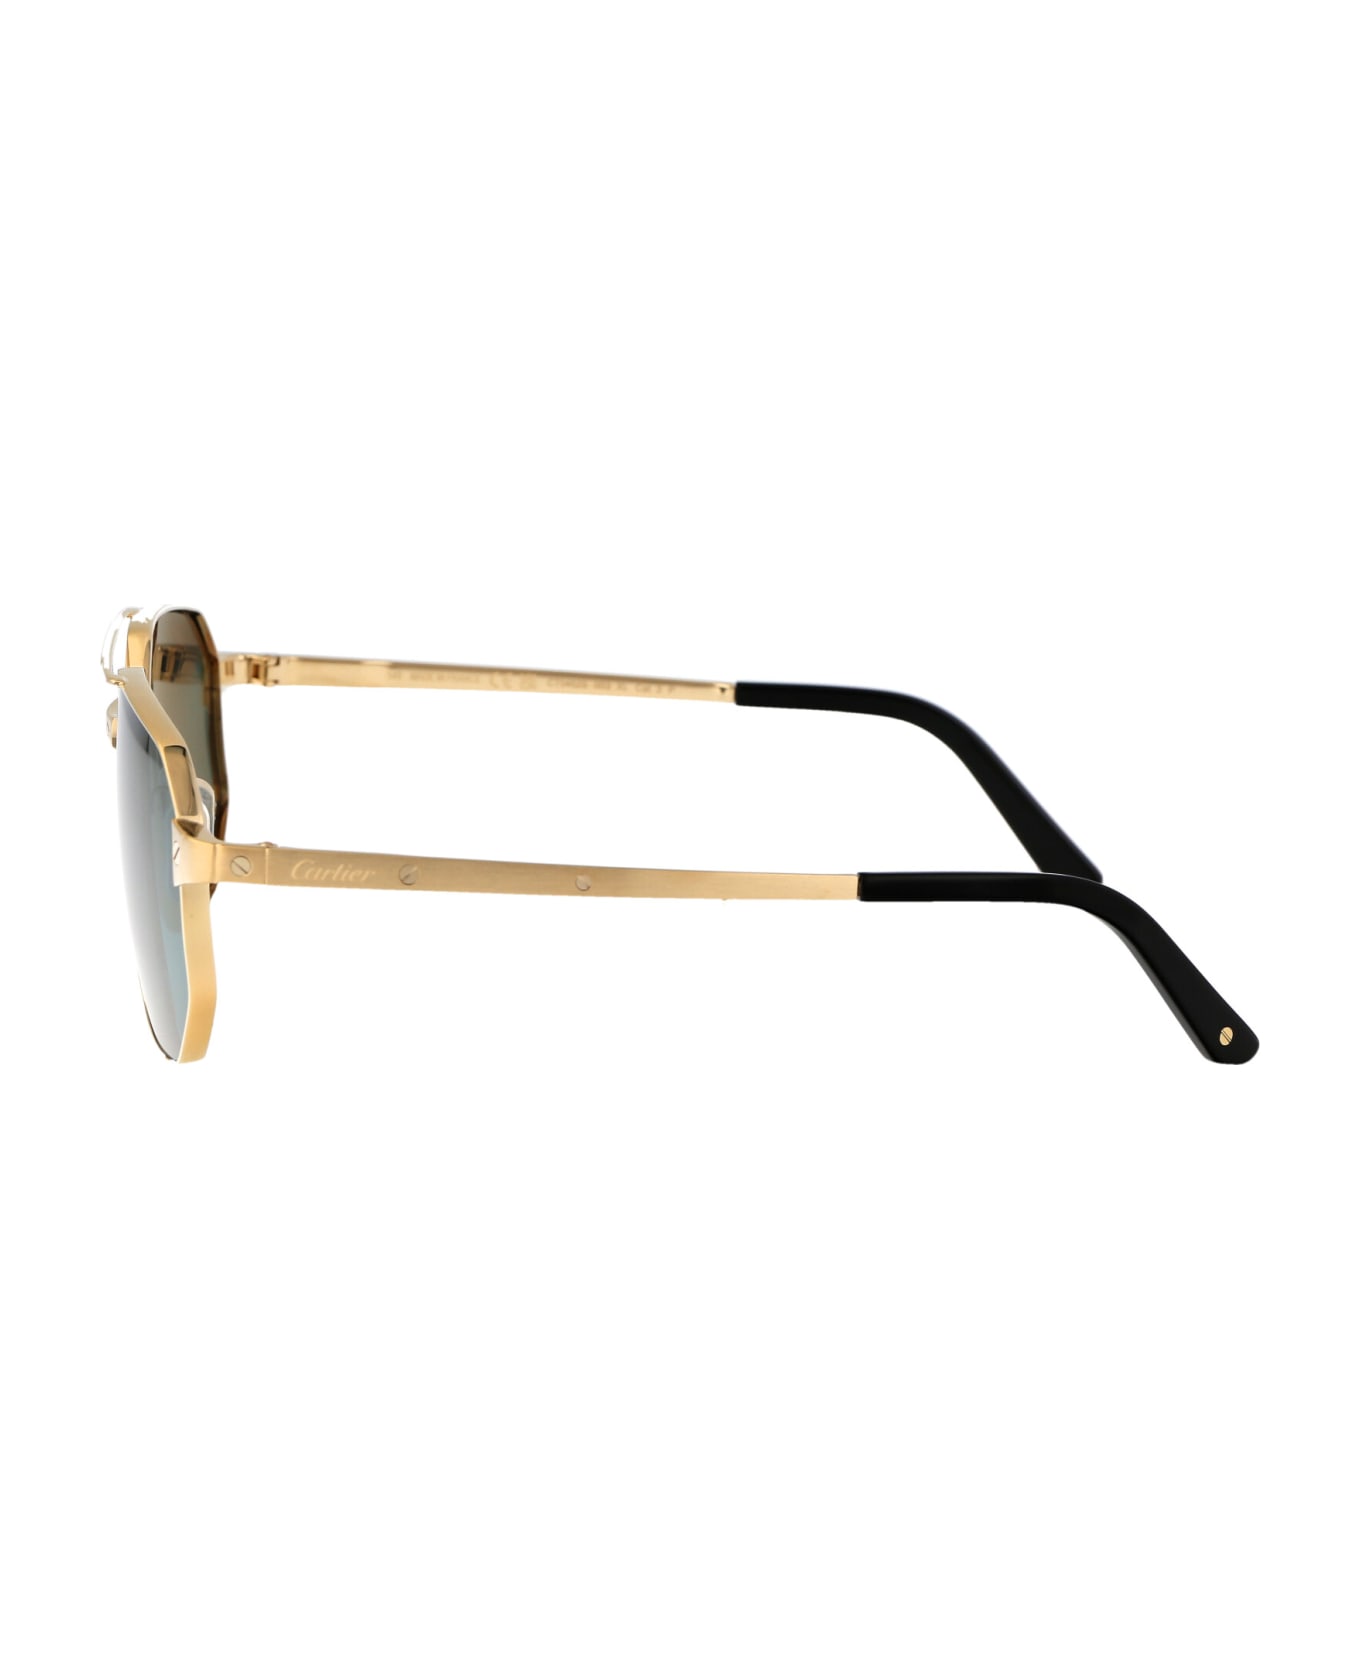 Cartier Eyewear Ct0462s Sunglasses - 003 GOLD GOLD GREEN サングラス